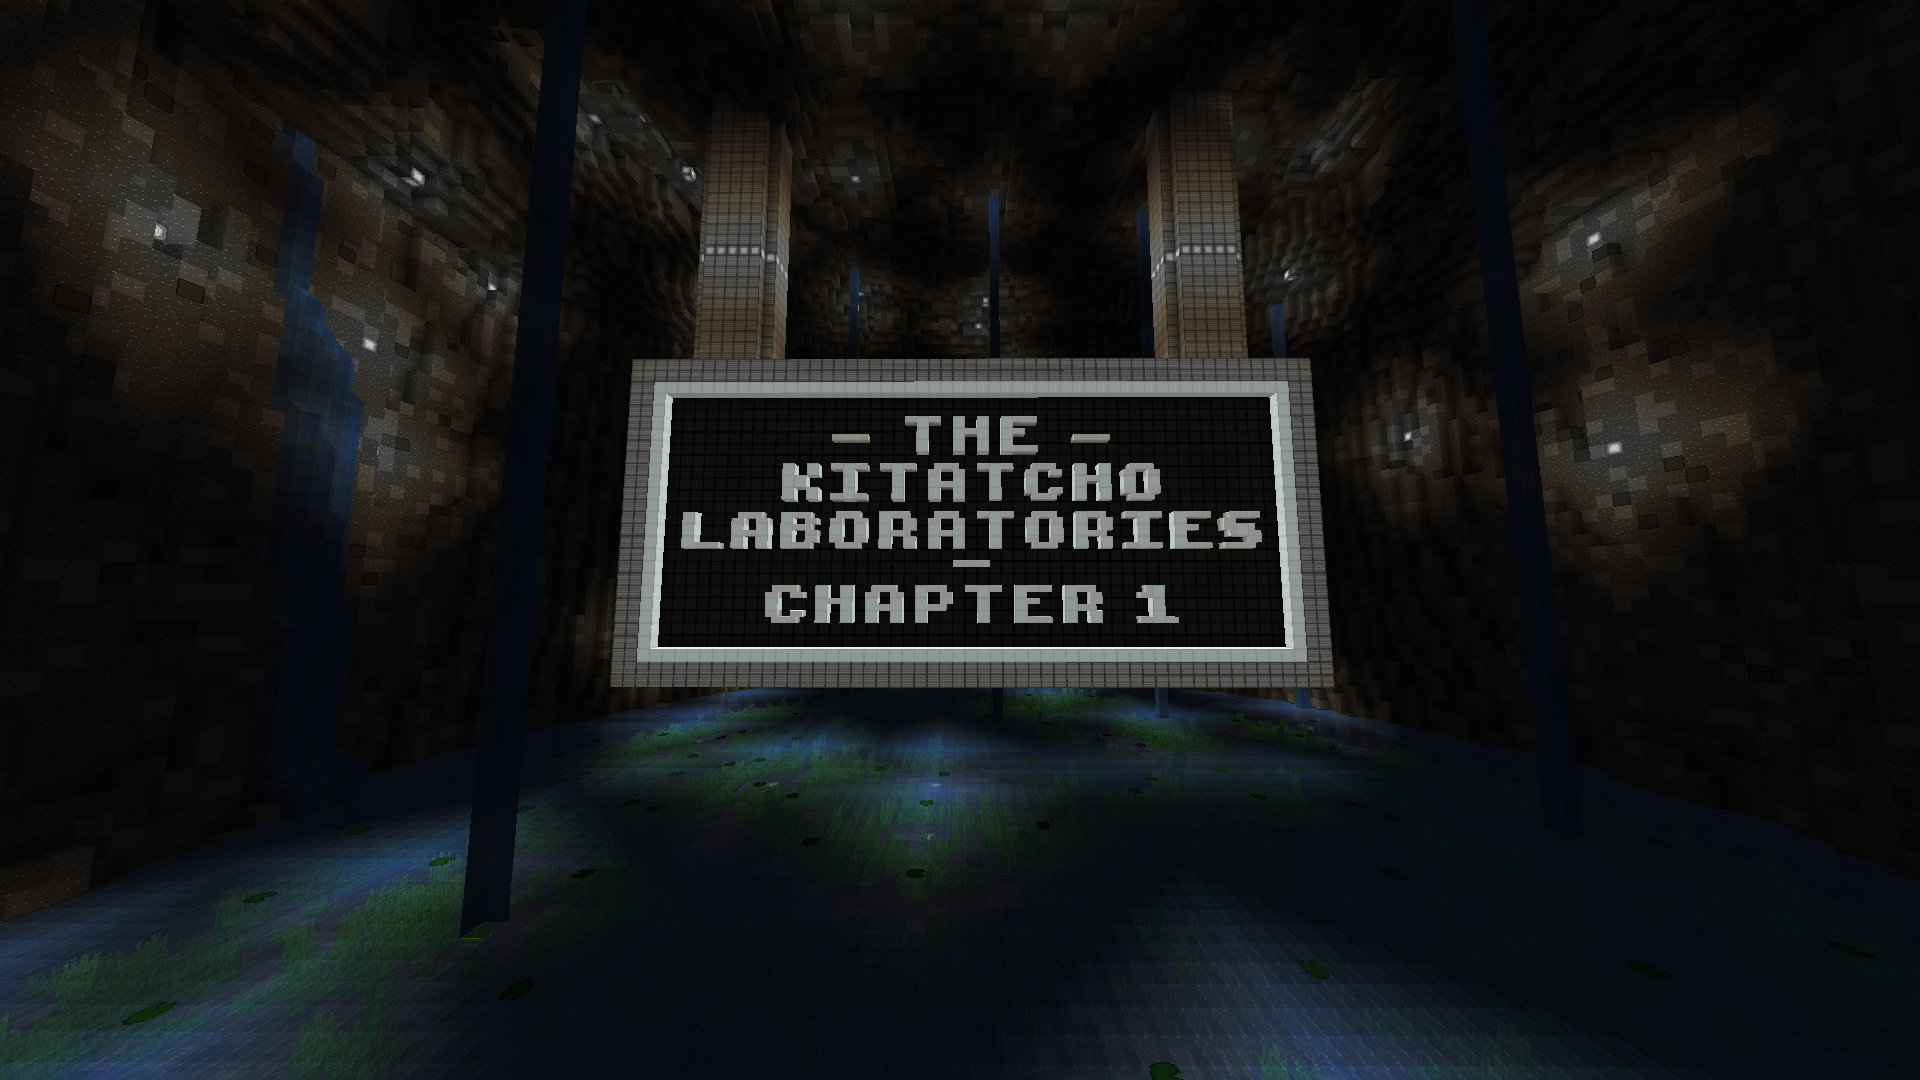 Télécharger The Kitatcho Laboratories - Chapter 1 (Reboot) pour Minecraft 1.16.3